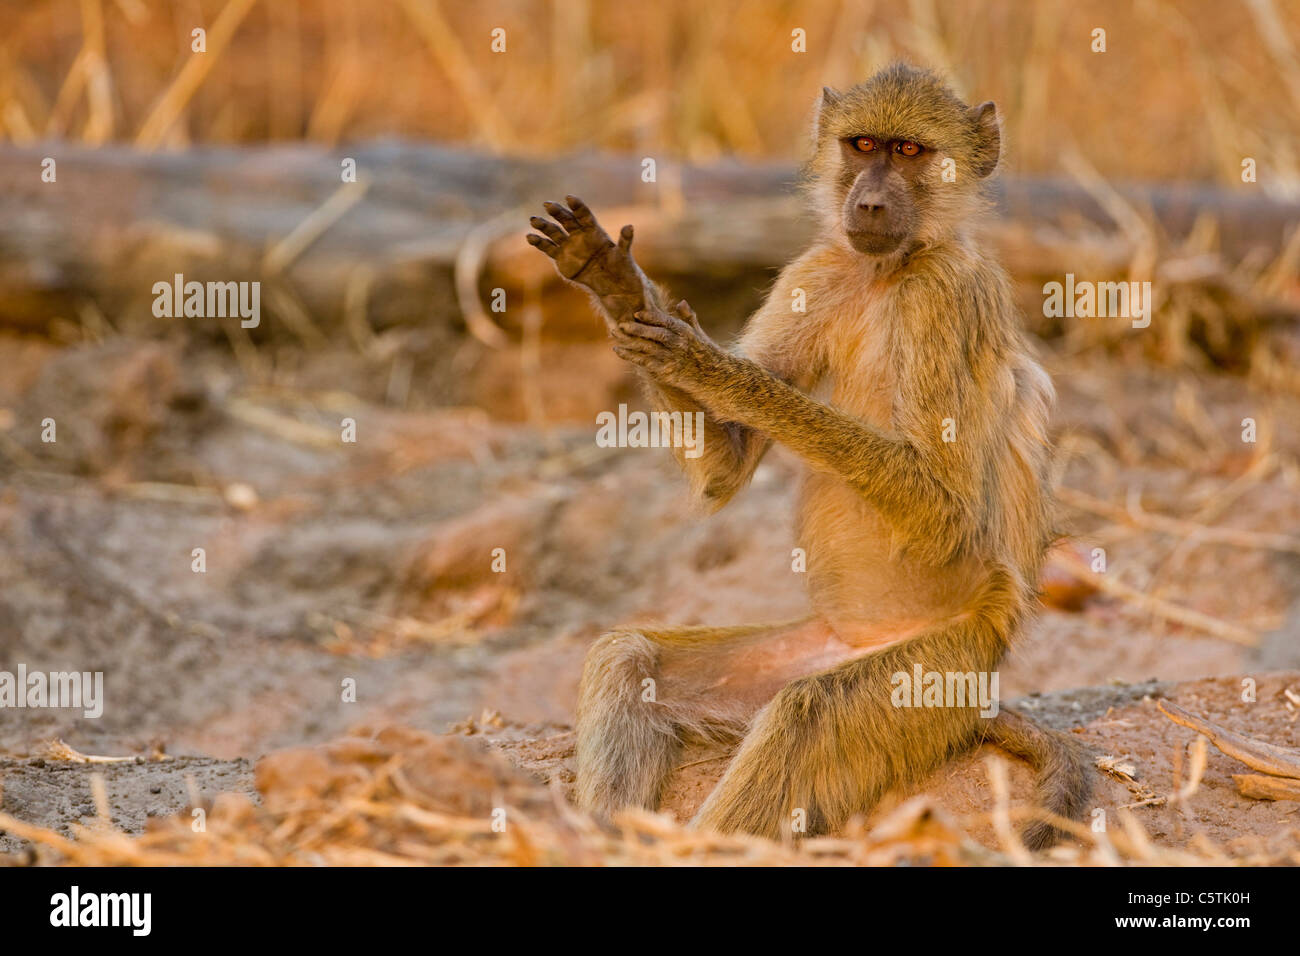 África, Sambia, un babuino Amarillo (Papio cynocephalus), Retrato Foto de stock